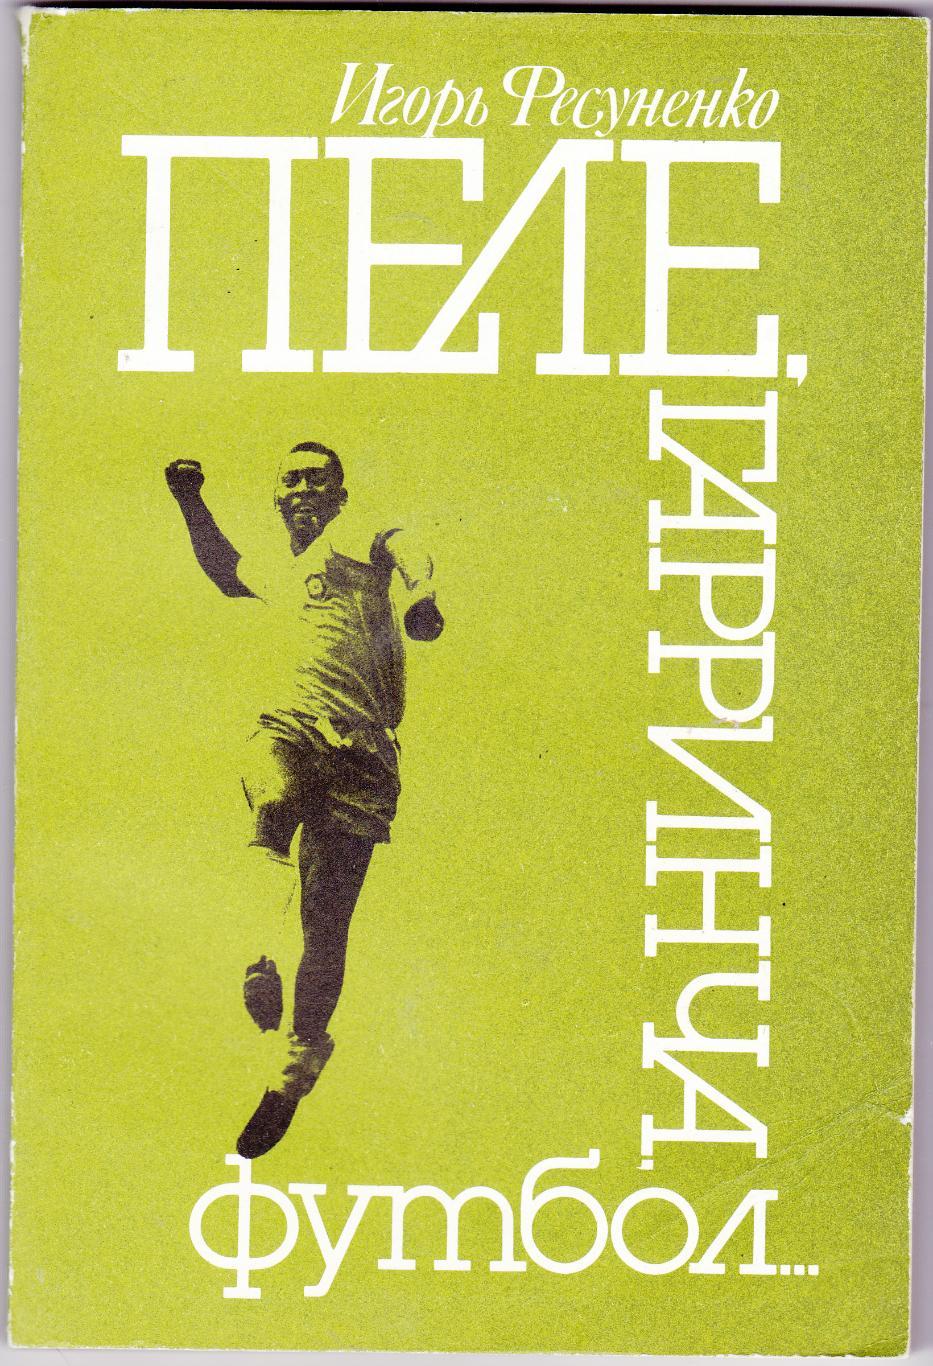 И.Фесуненко Пеле, Гарринча 1990